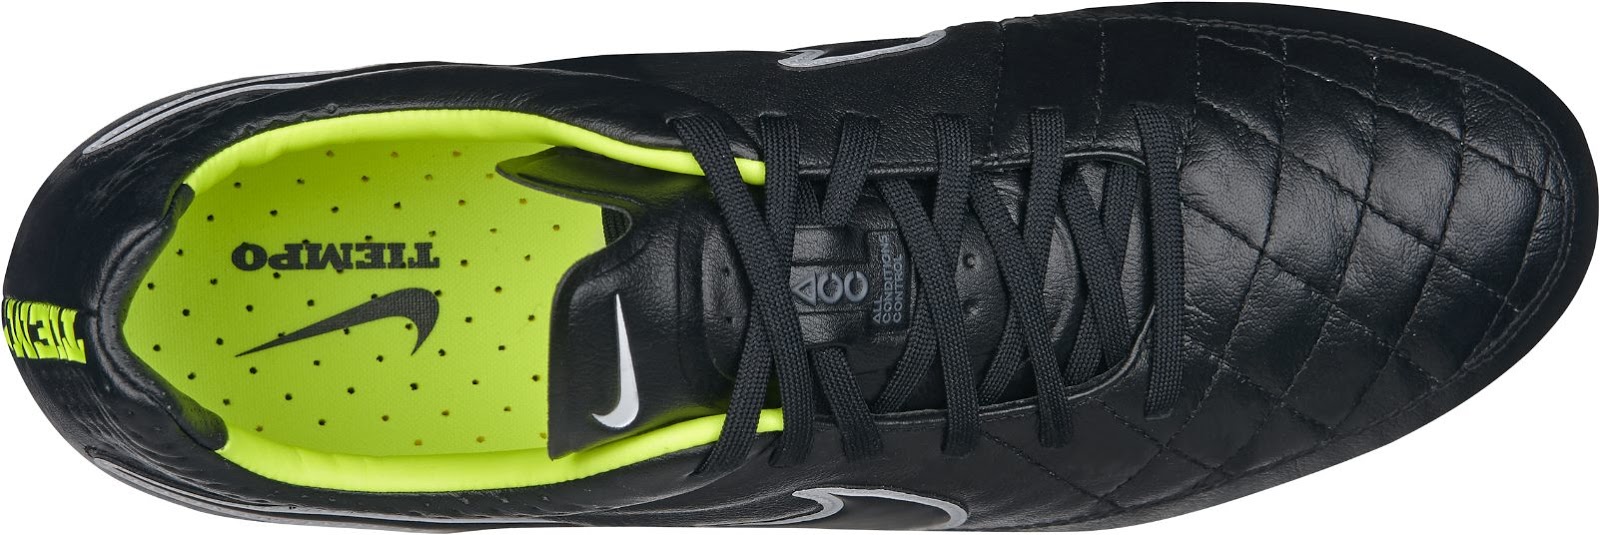 Nike Legend V Blackout 2014 Boot Released - Footy Headlines